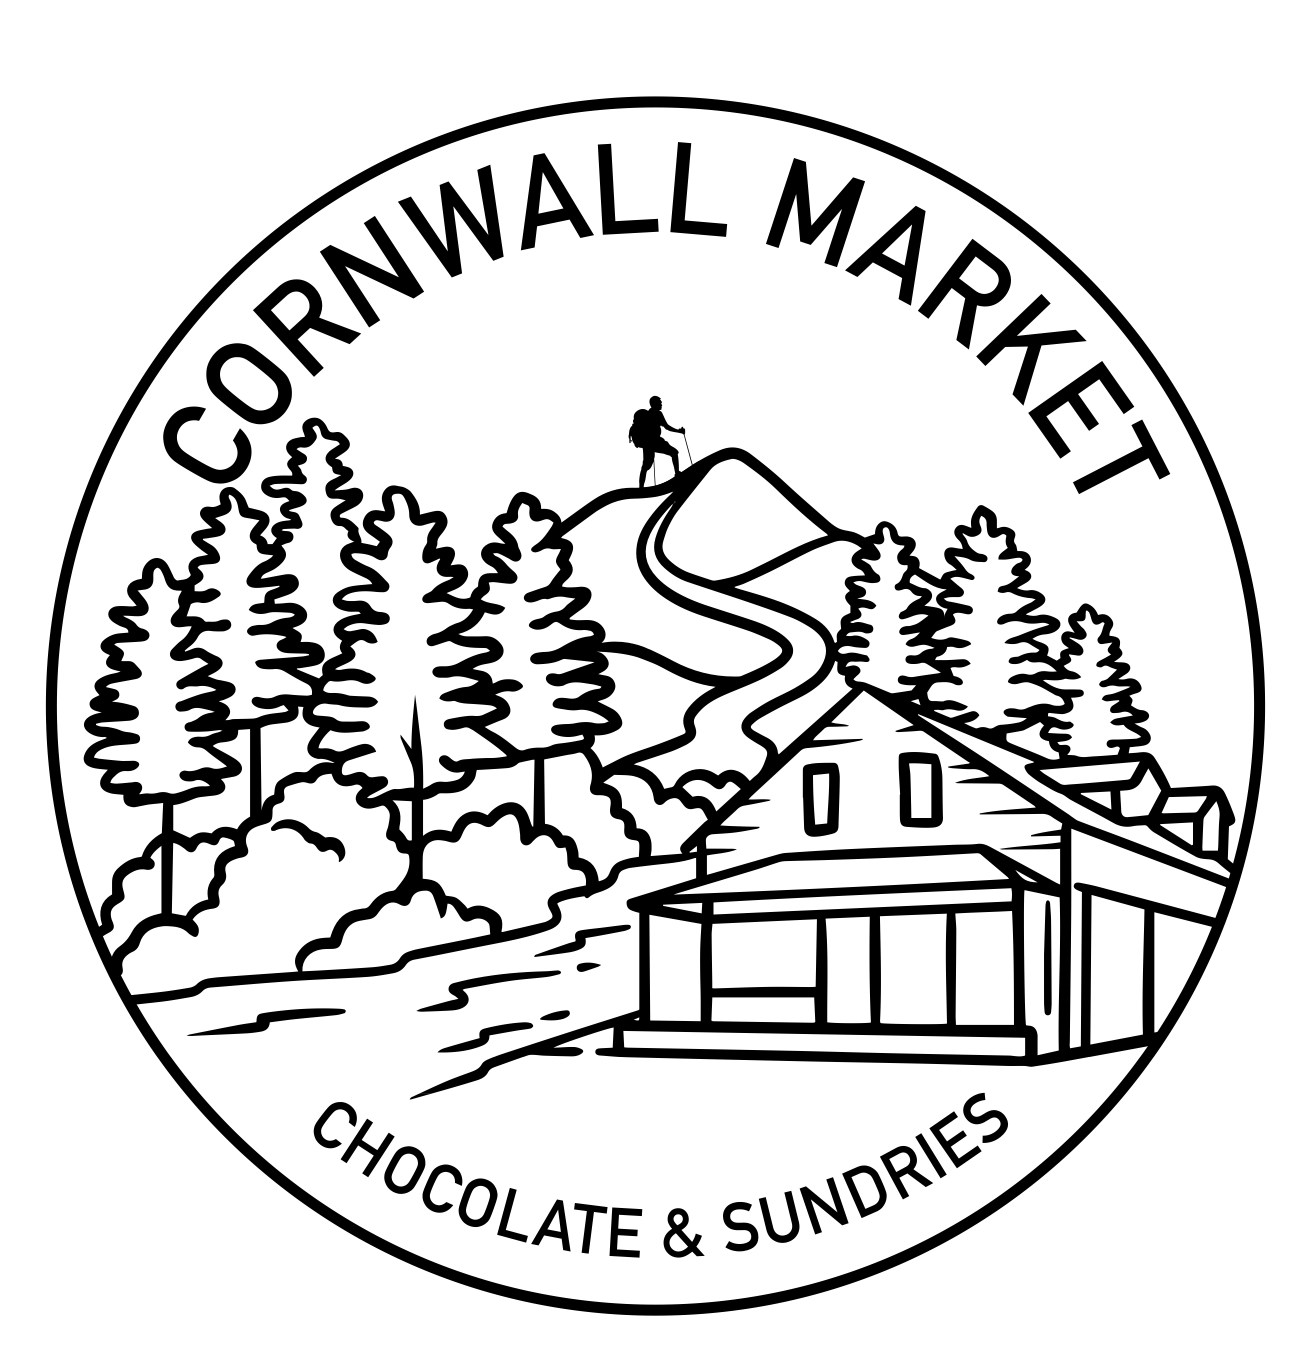 Cornwall Market